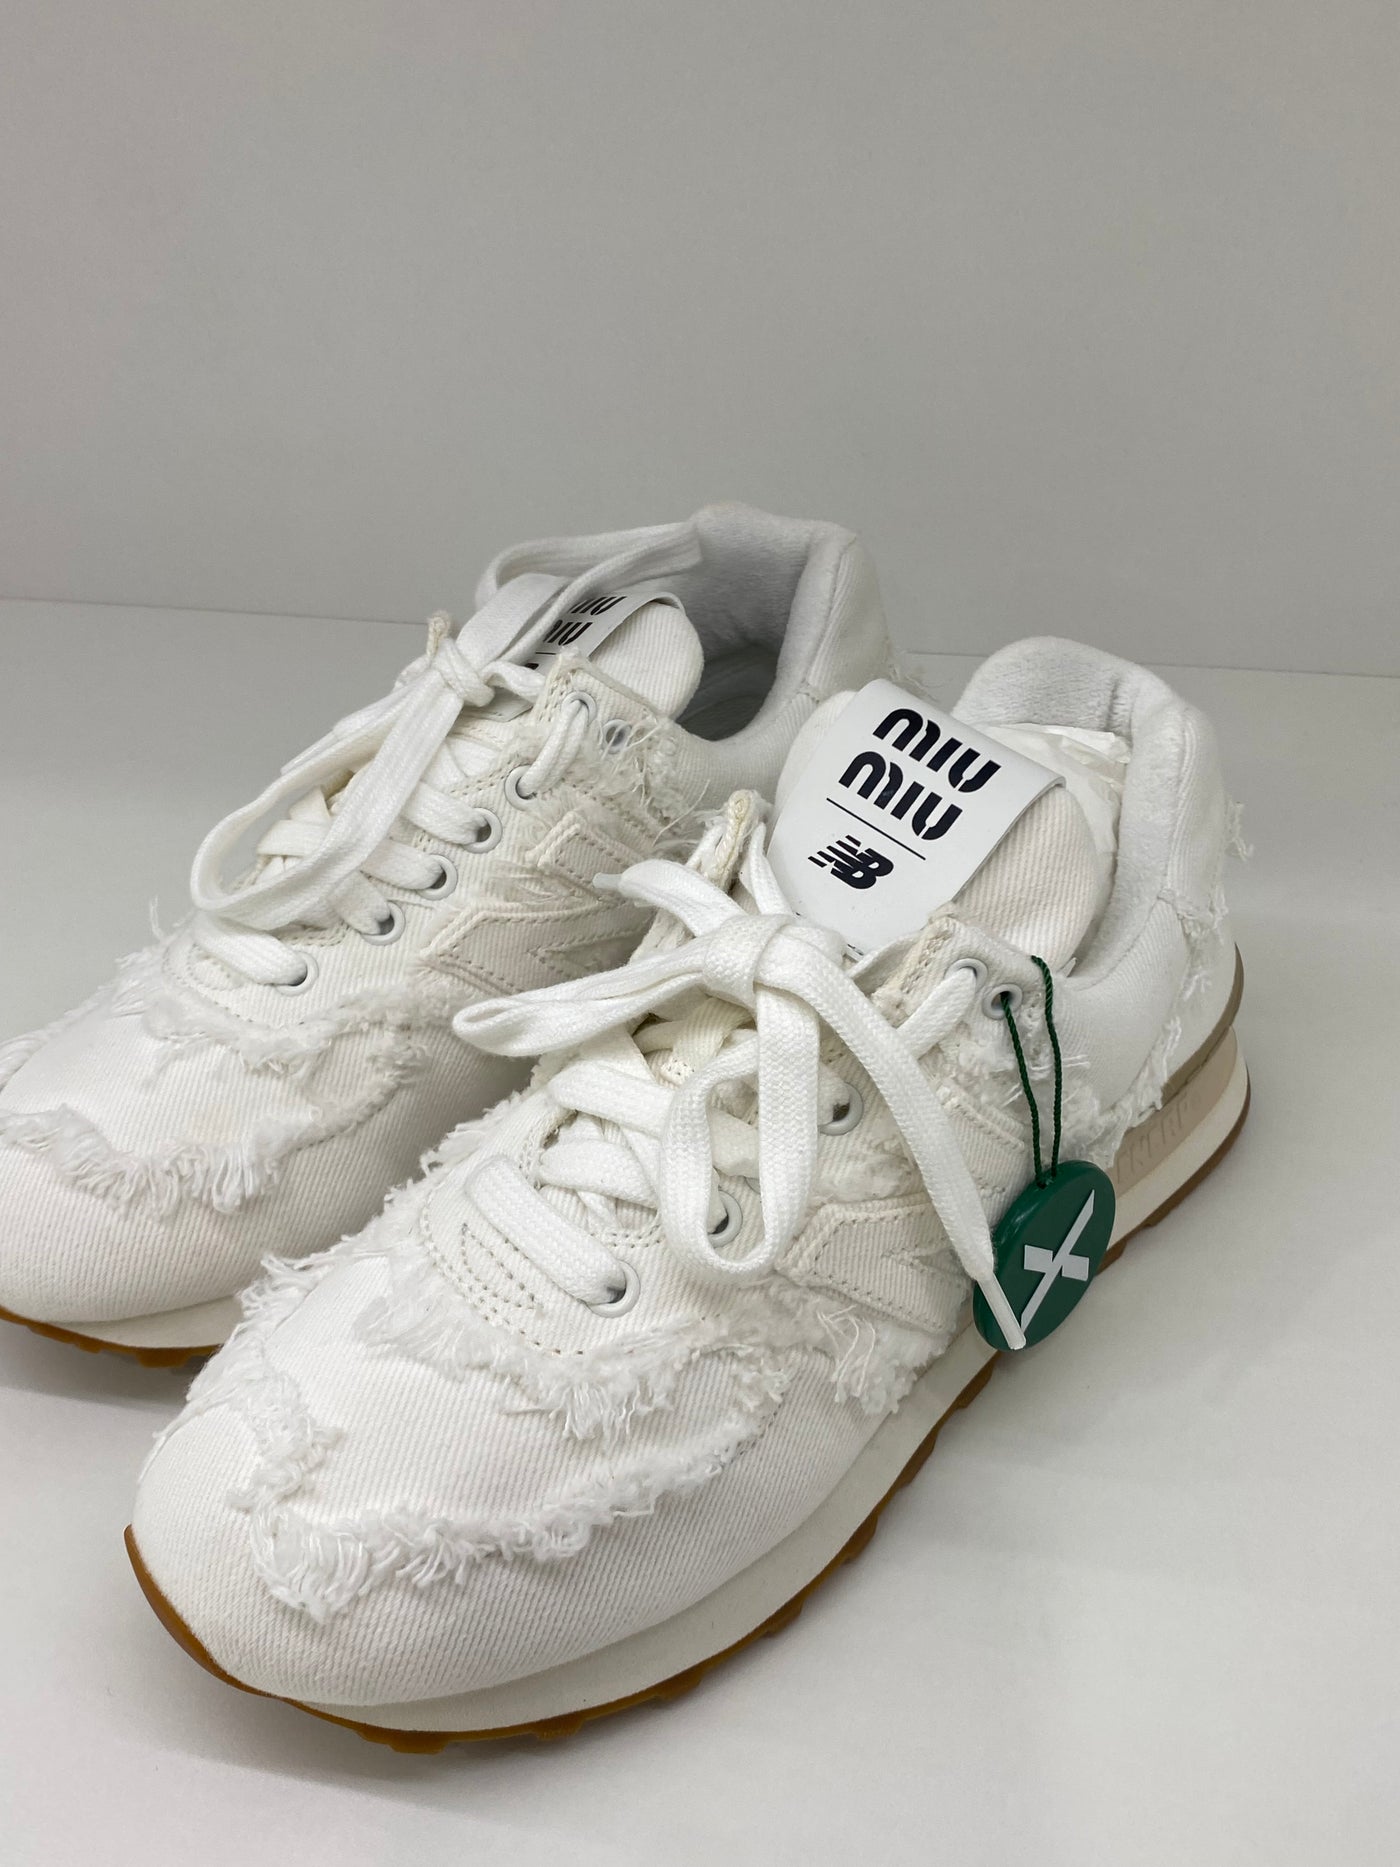 Miu Miu x New Balance White Sneakers - Size 38